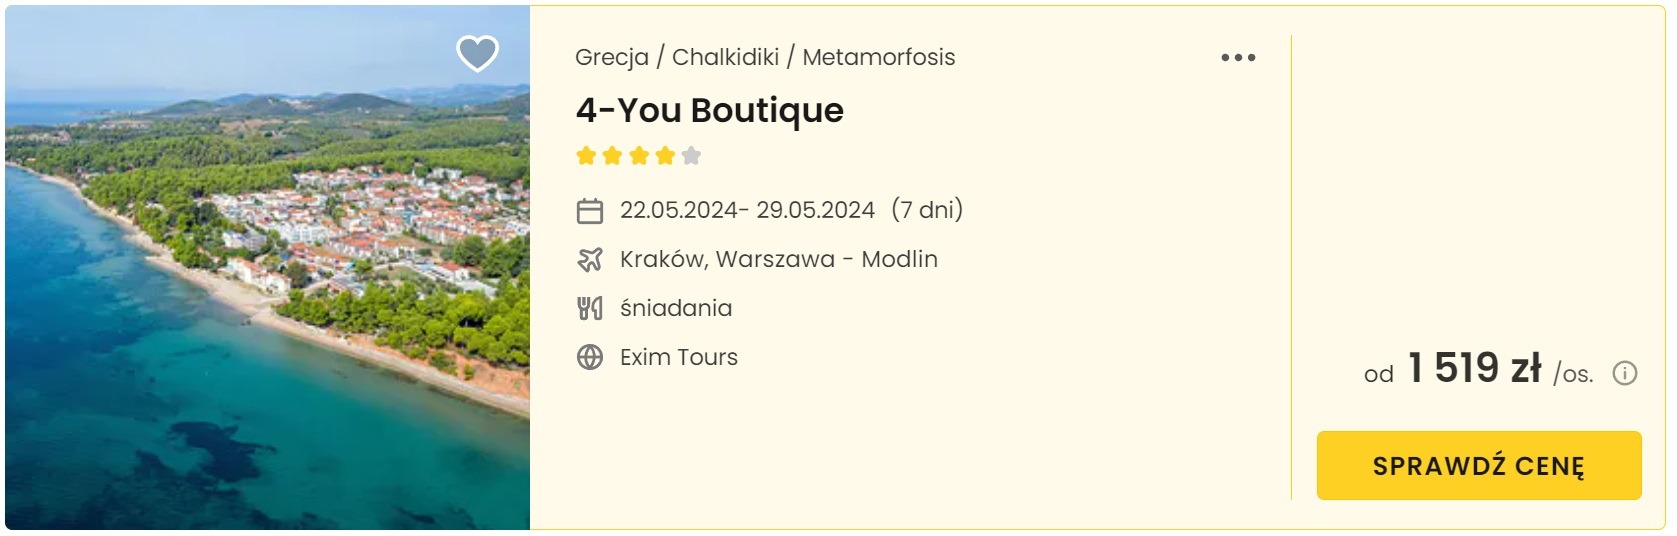 4-You Boutique 22.05-29.05.2024